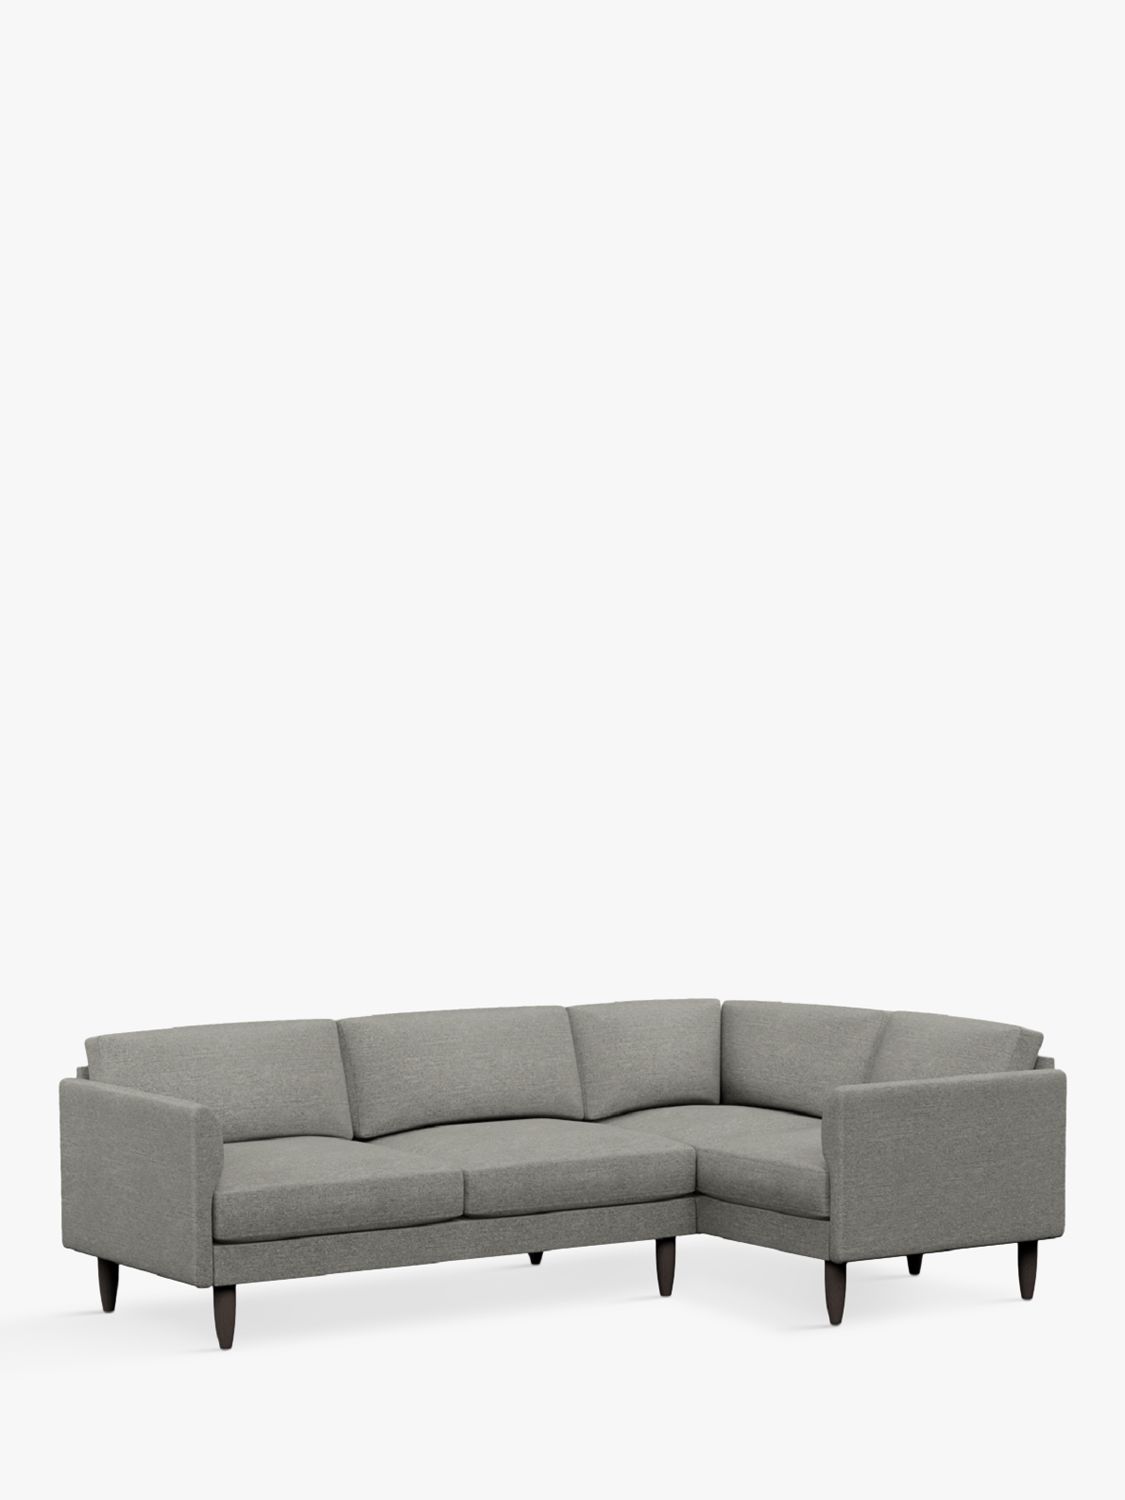 Hutch Rise Curve Arm 5 Seater Slim Corner Sofa, Dark Leg